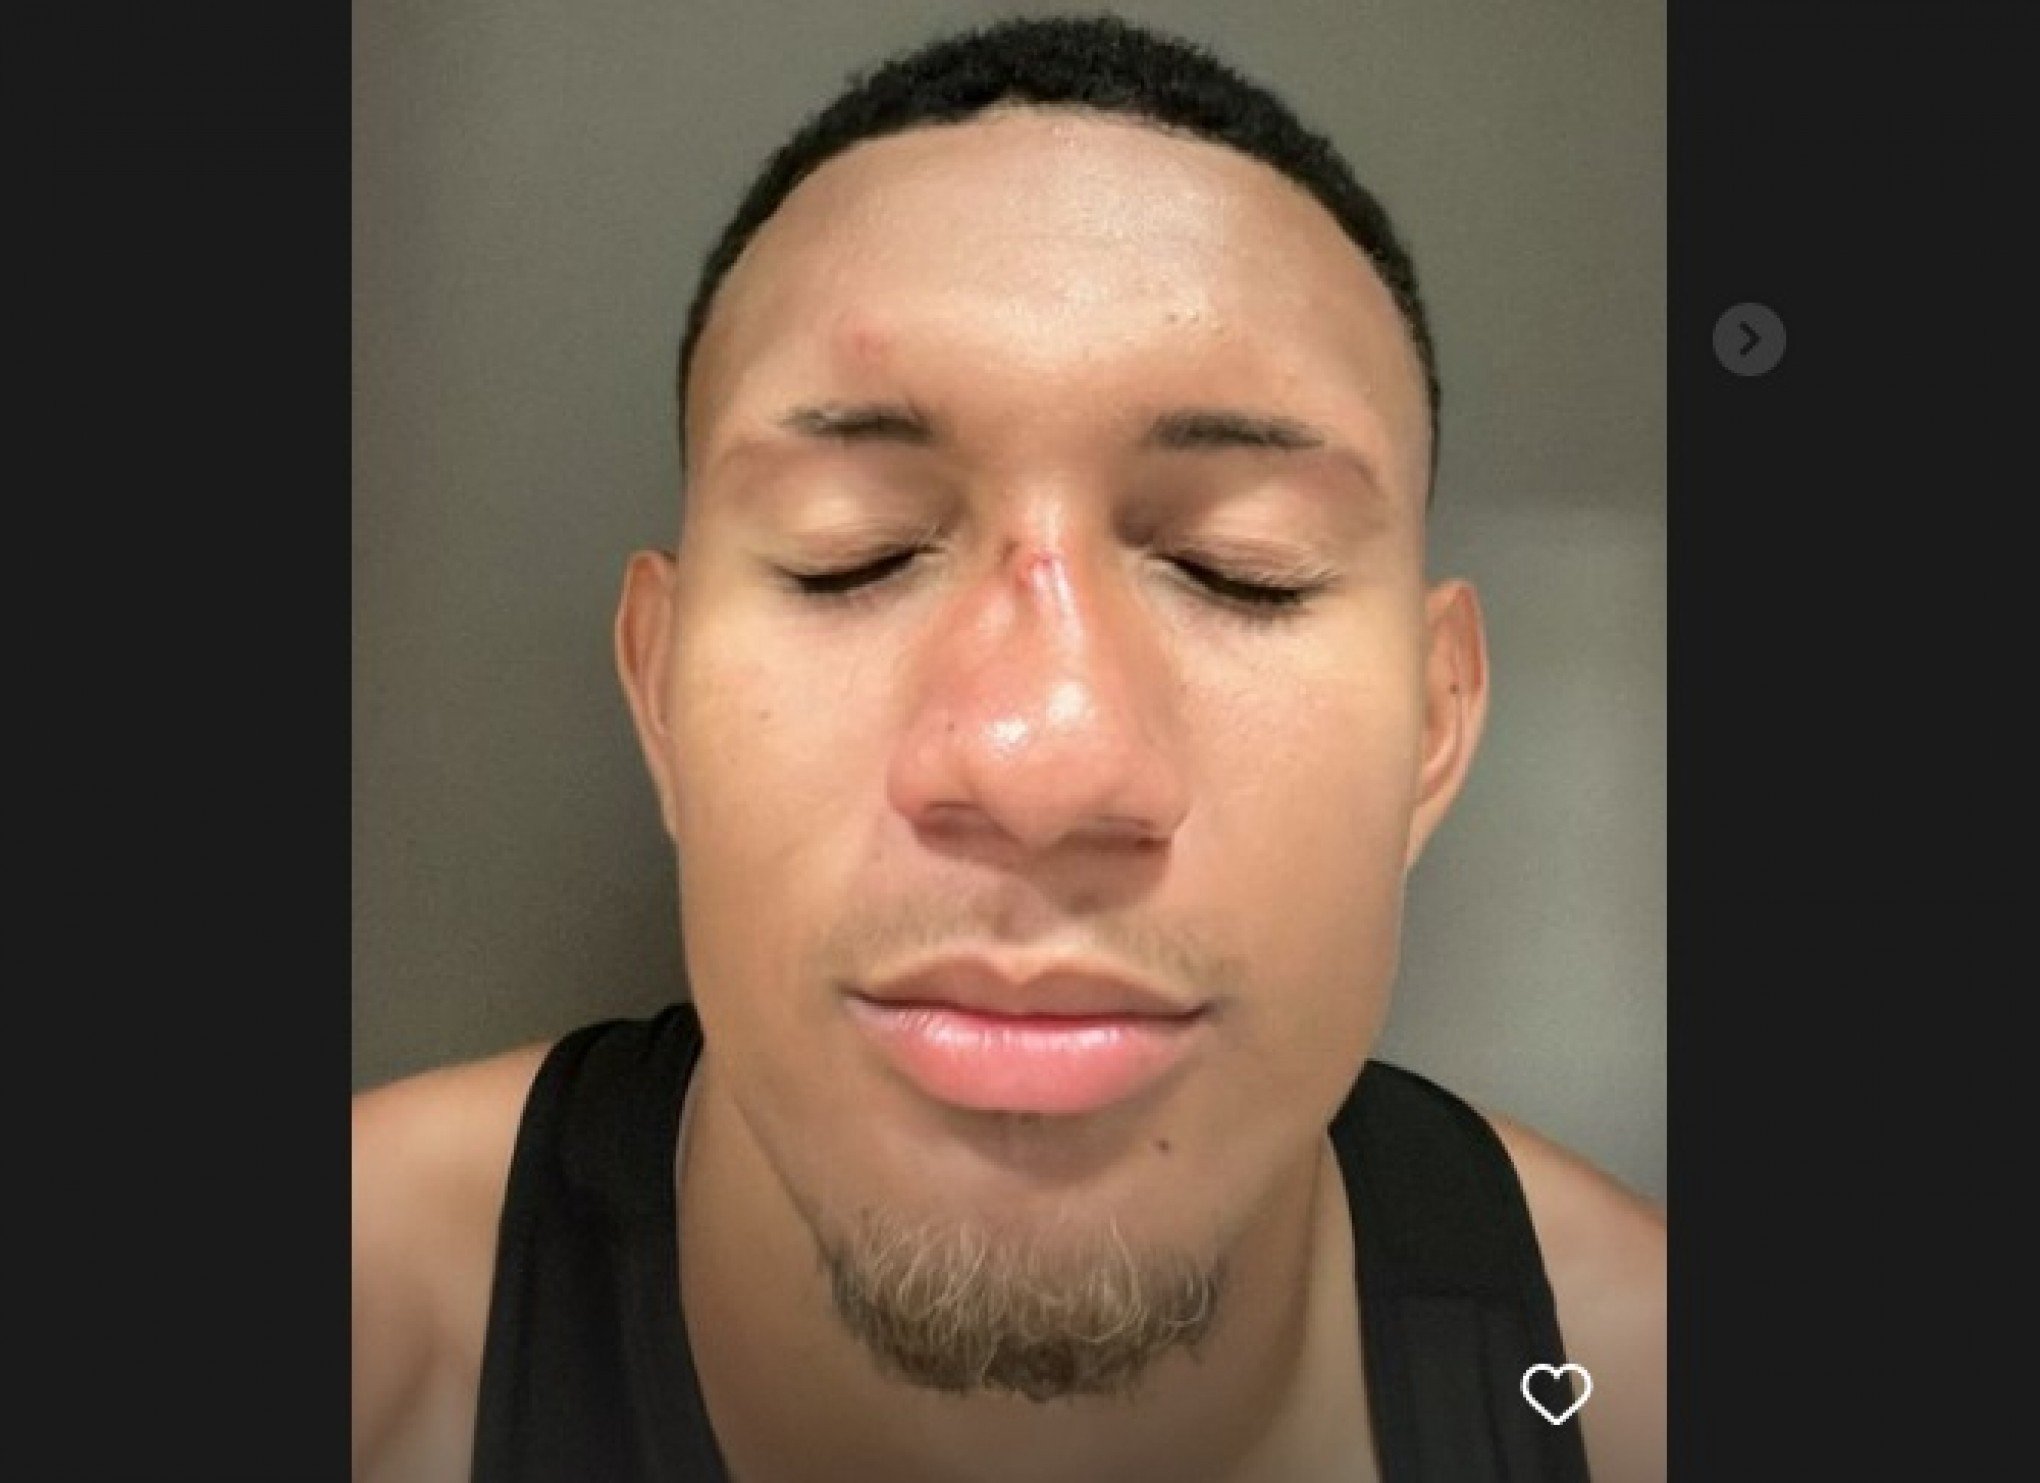 Jogador sofre fratura no nariz após briga generalizada no Gauchão